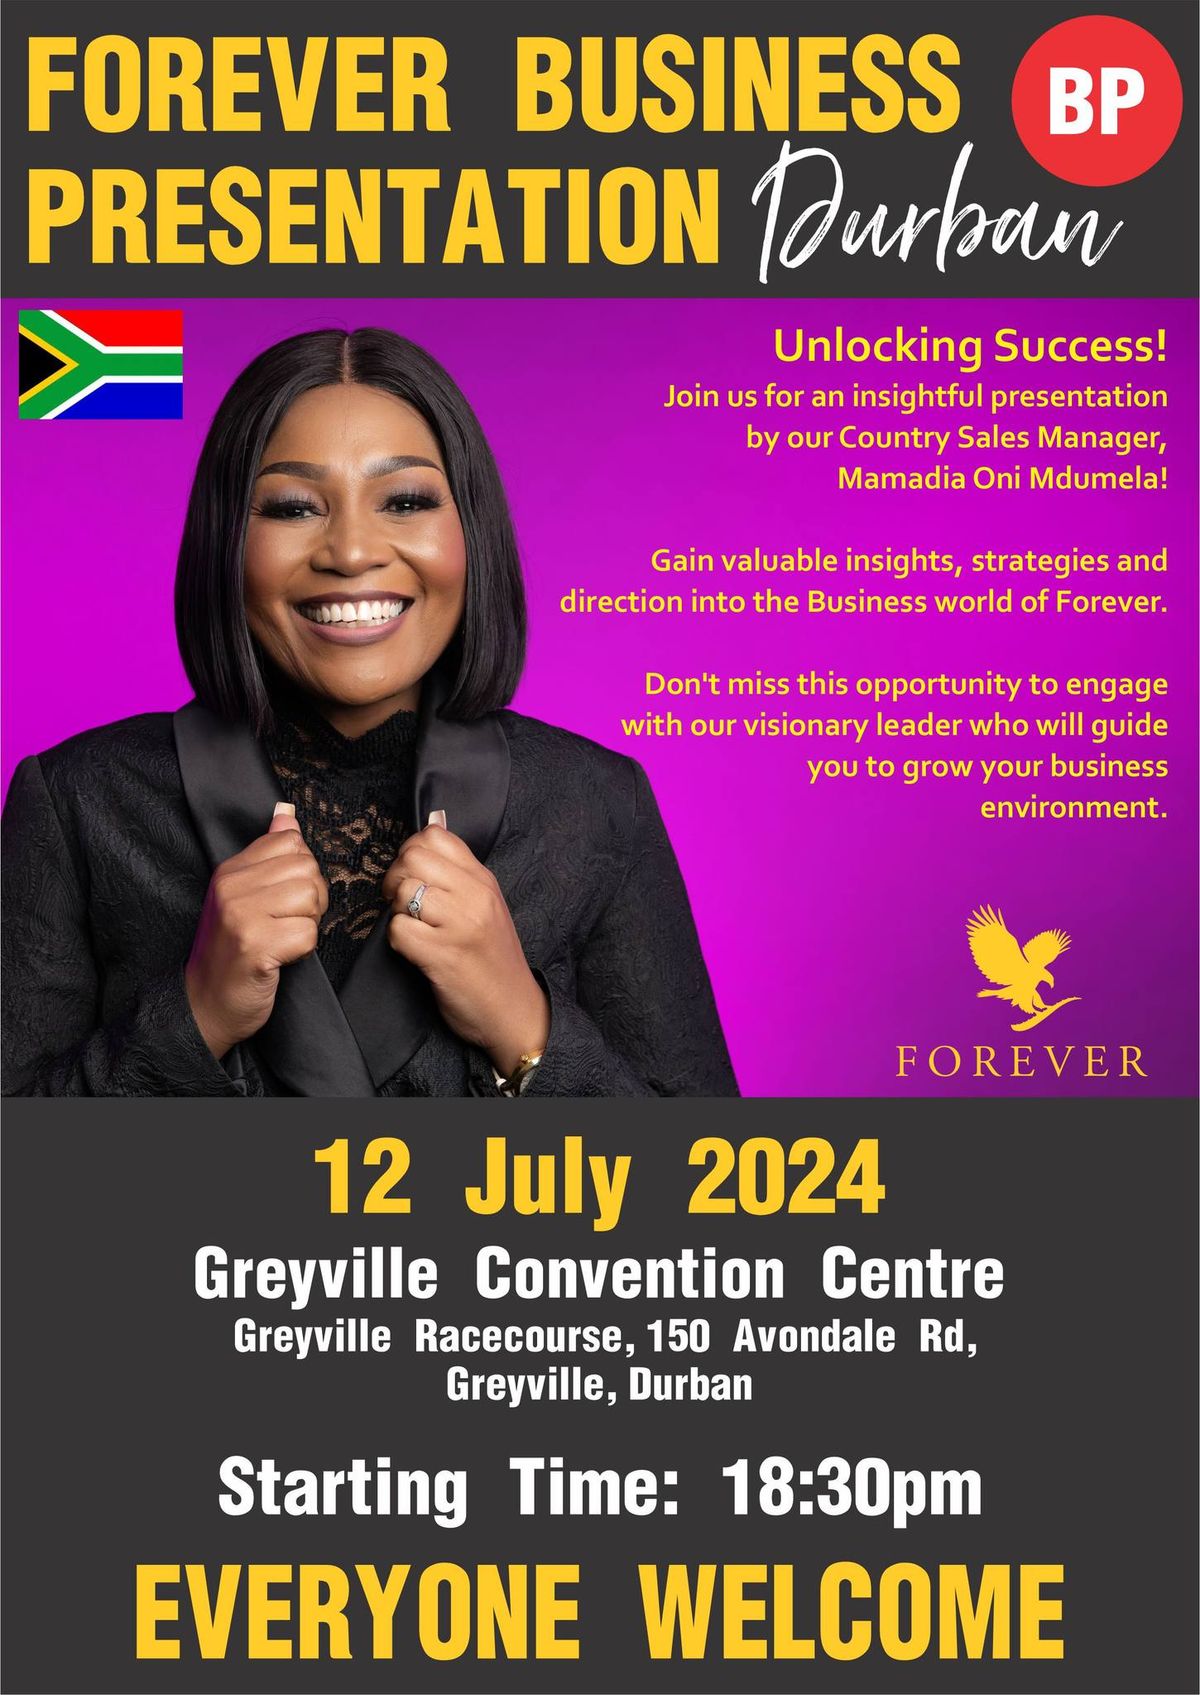 Forever Business Presentation - Greyville, Durban (KZN)